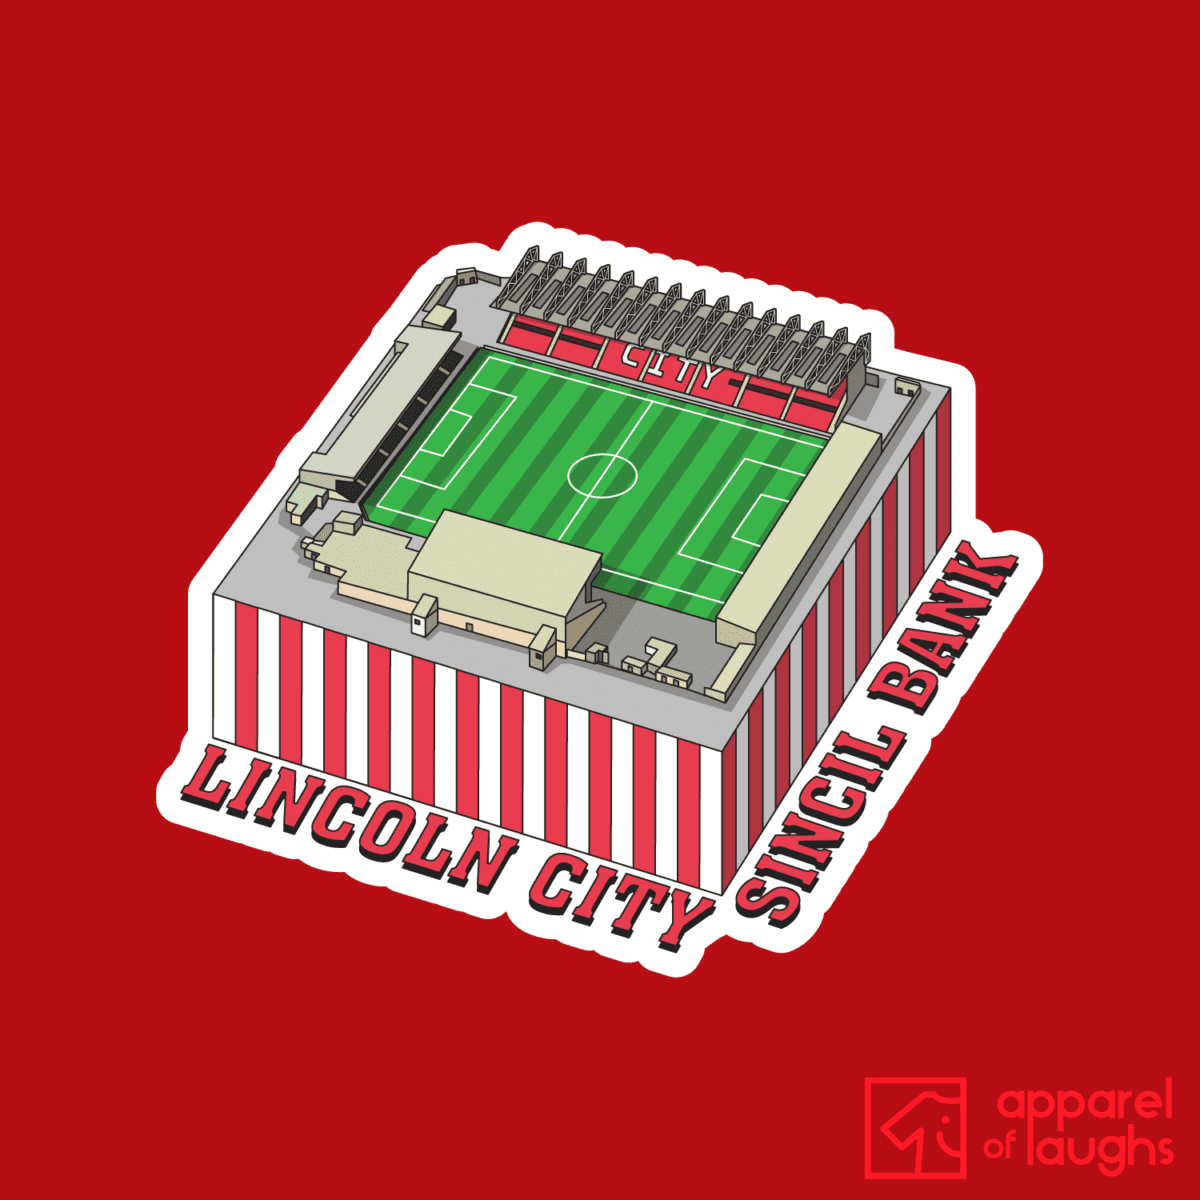 Lincoln City Sincil Bank Football Stadium Illustration T Shirt Design Red